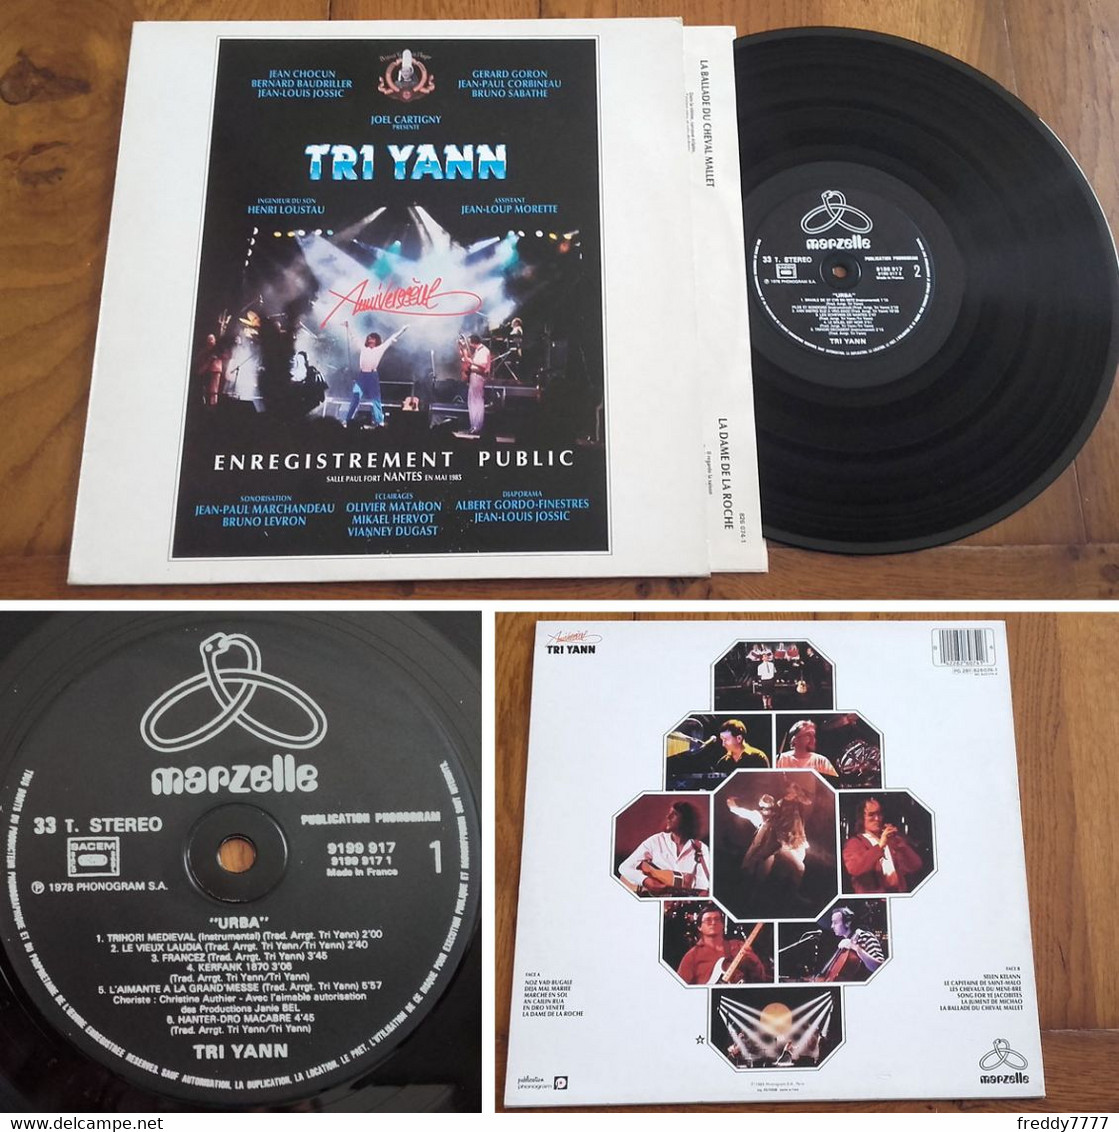 RARE French LP 33t RPM (12") TRI YANN (1978) - Rock